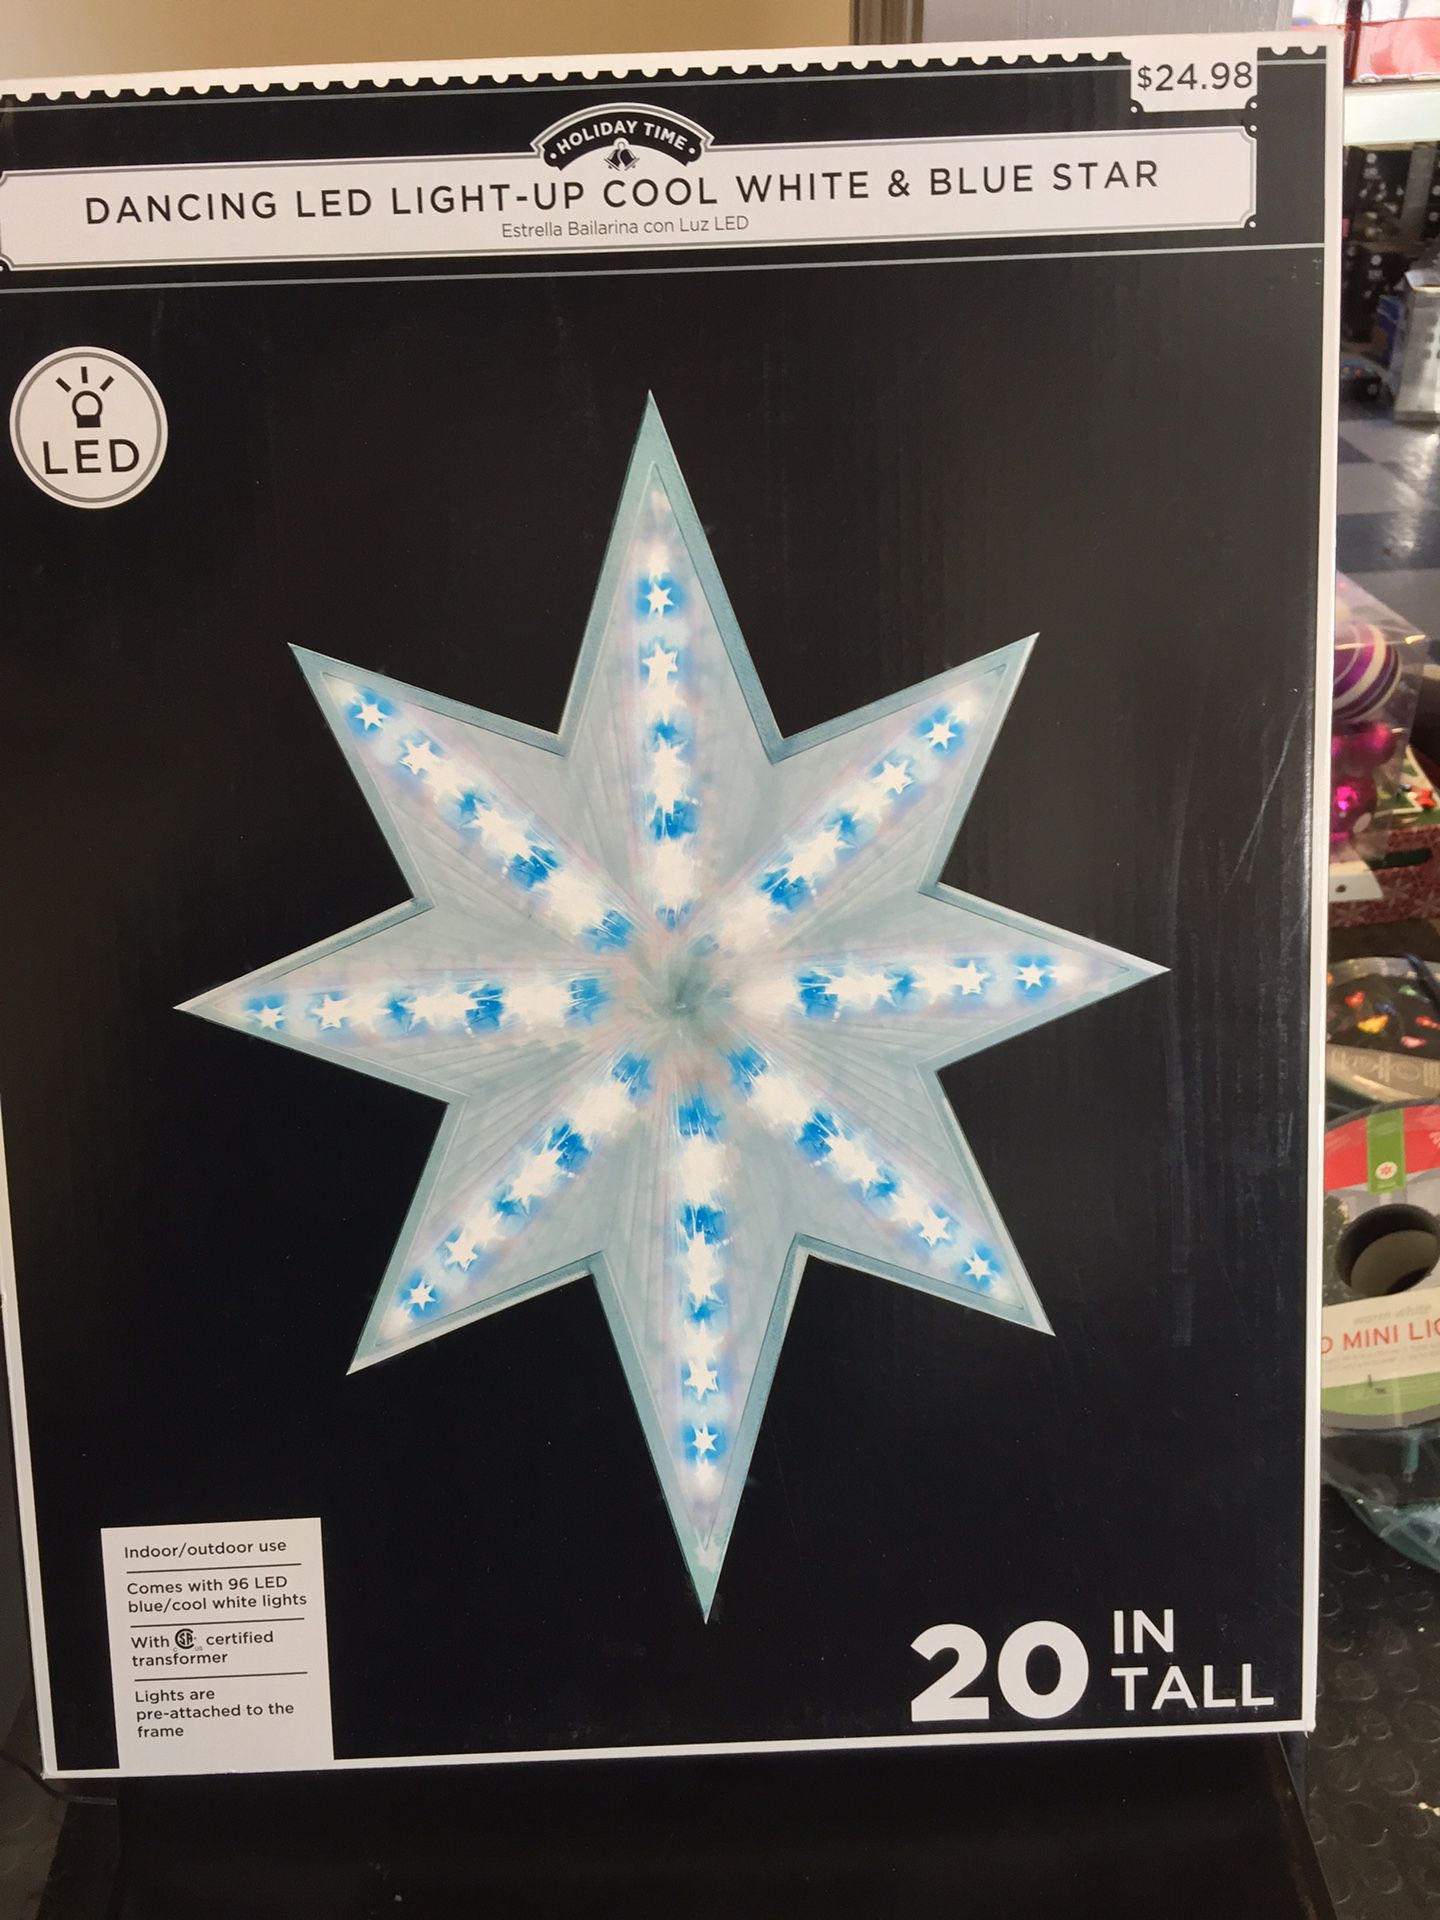 20” tall LED dancing star blue & white